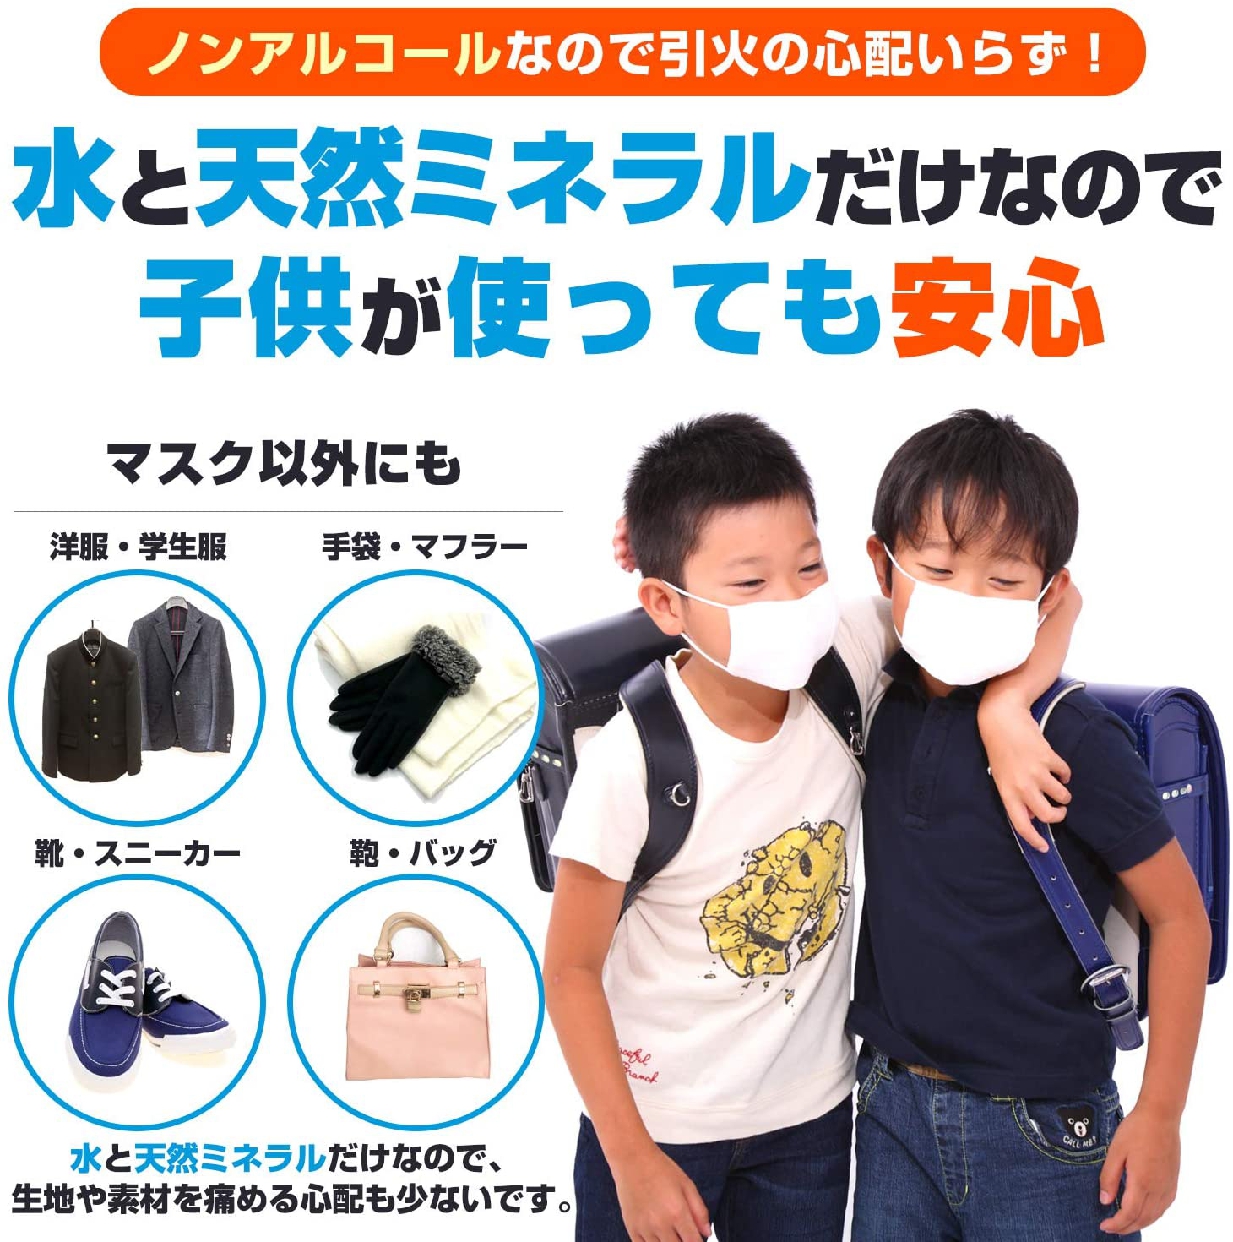 BBIT(ビビット) マスク用ZEROデオドラント抗菌・除菌・消臭剤スプレーの商品画像7 